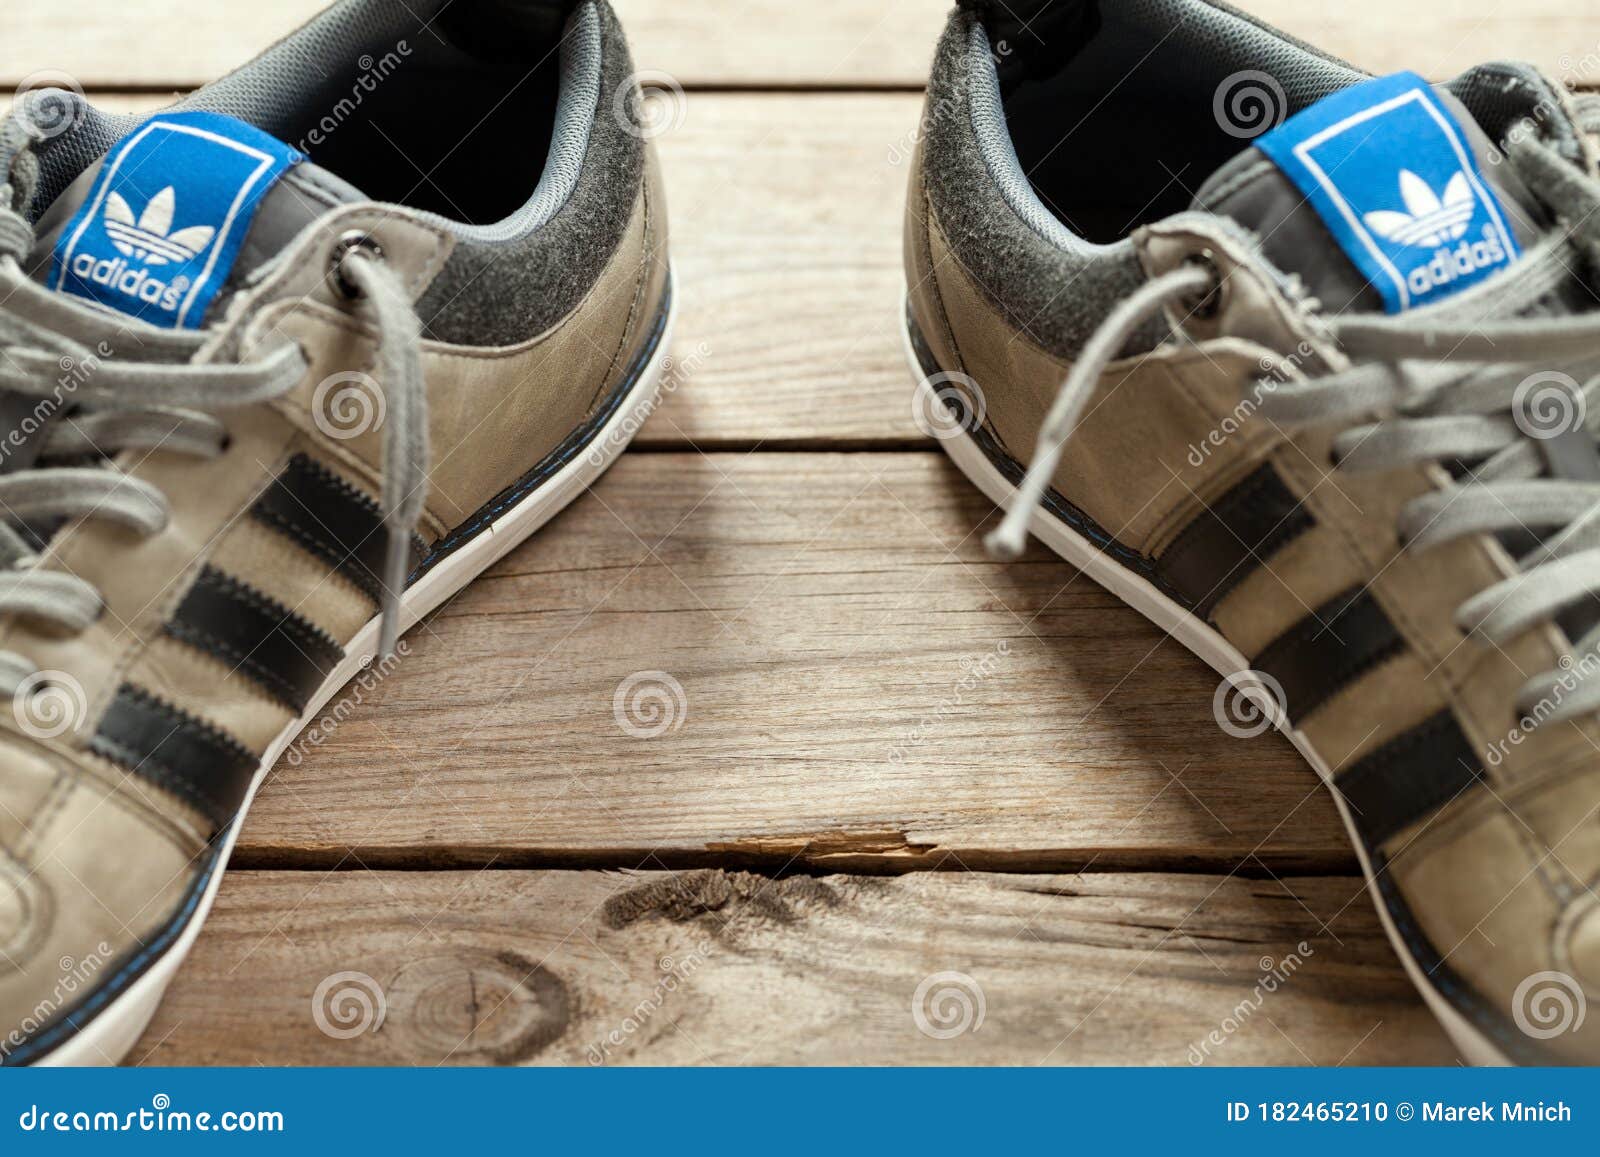 Zapatos adidas usados imagen editorial. Imagen de manera - 182465210